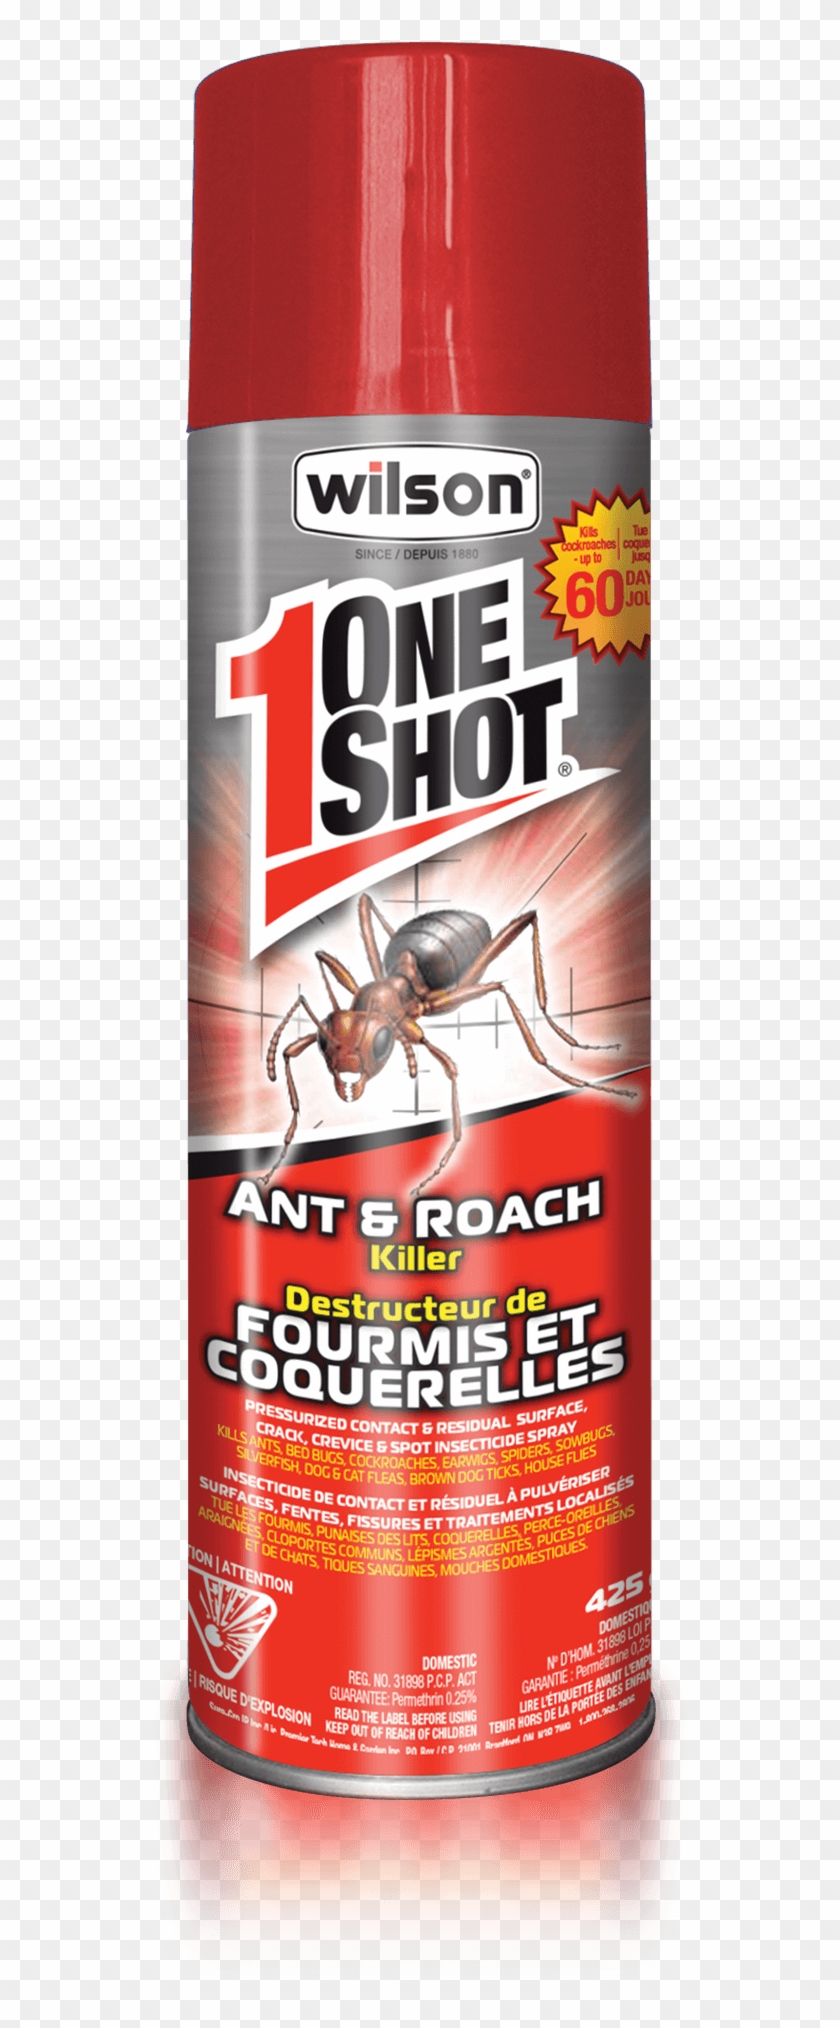 Wilson One Shot Ant & Roach Killer - Arachnicide Clipart #392138